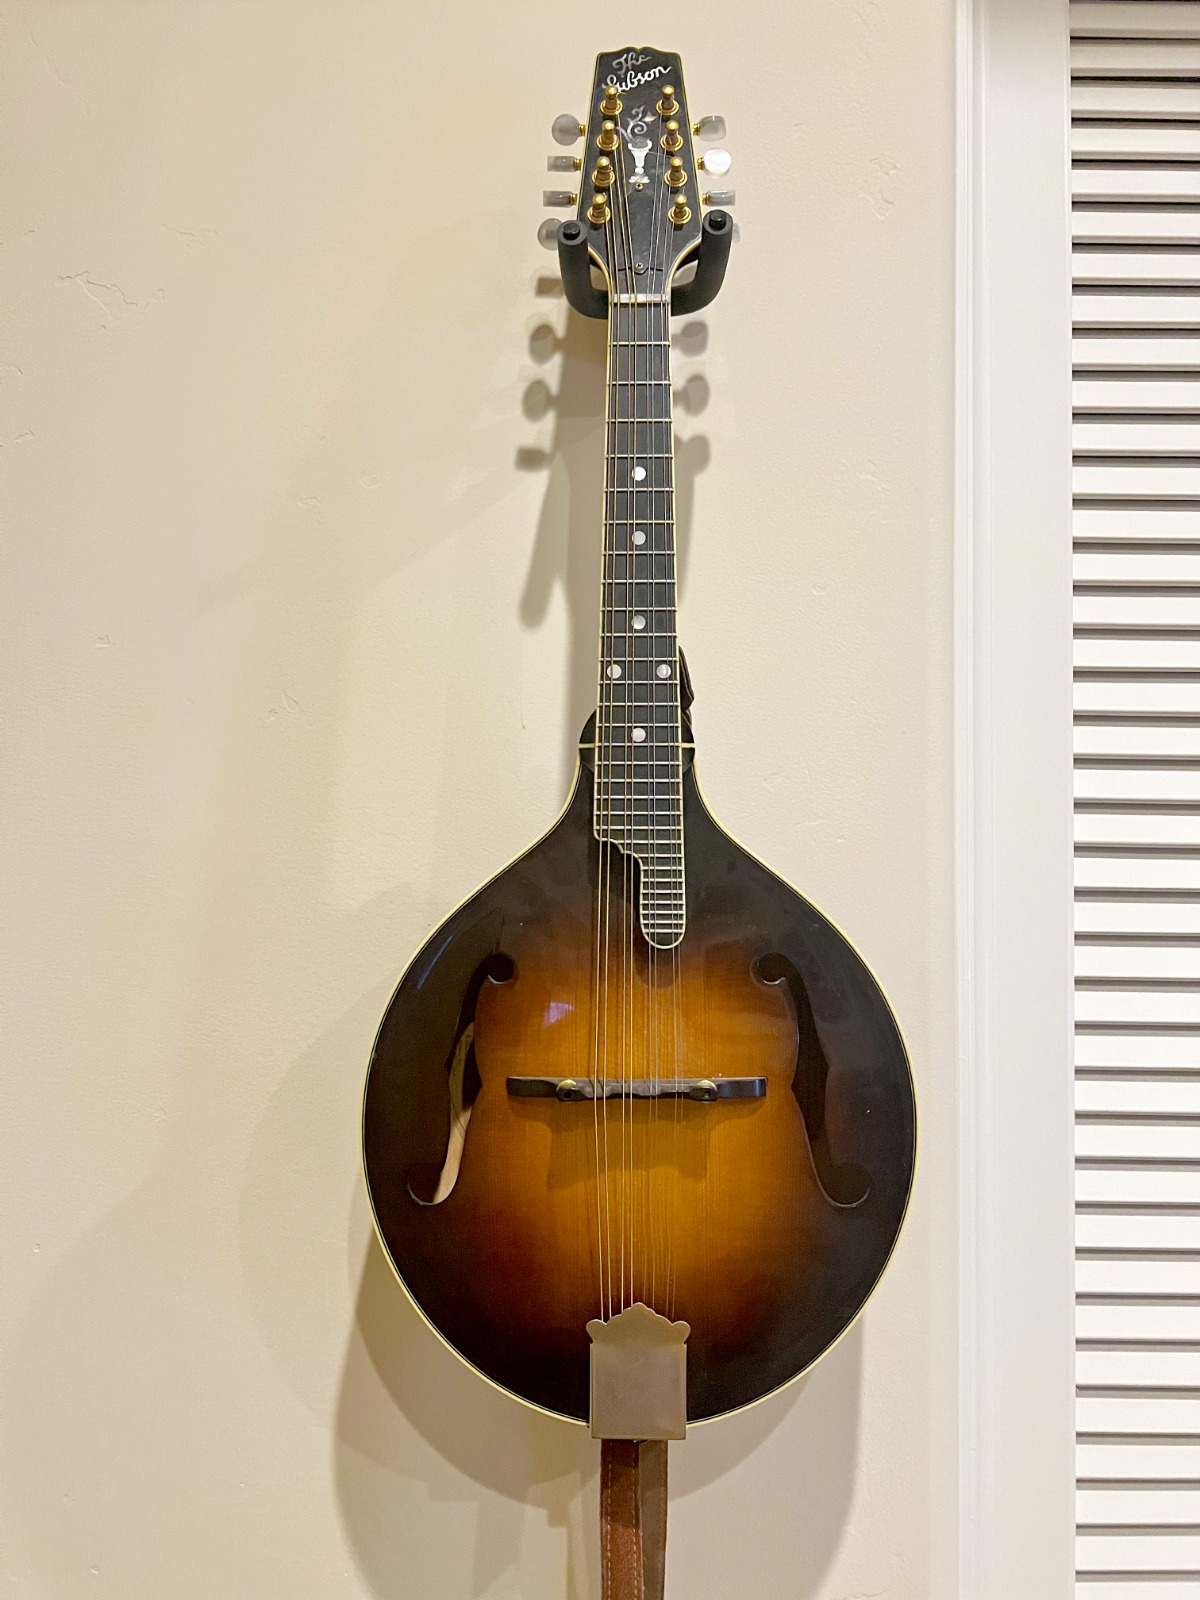 Gibson A-5L “Snakehead” Mandolin sgnd "Bruce Weber "-Sunburst - 14” neck scale